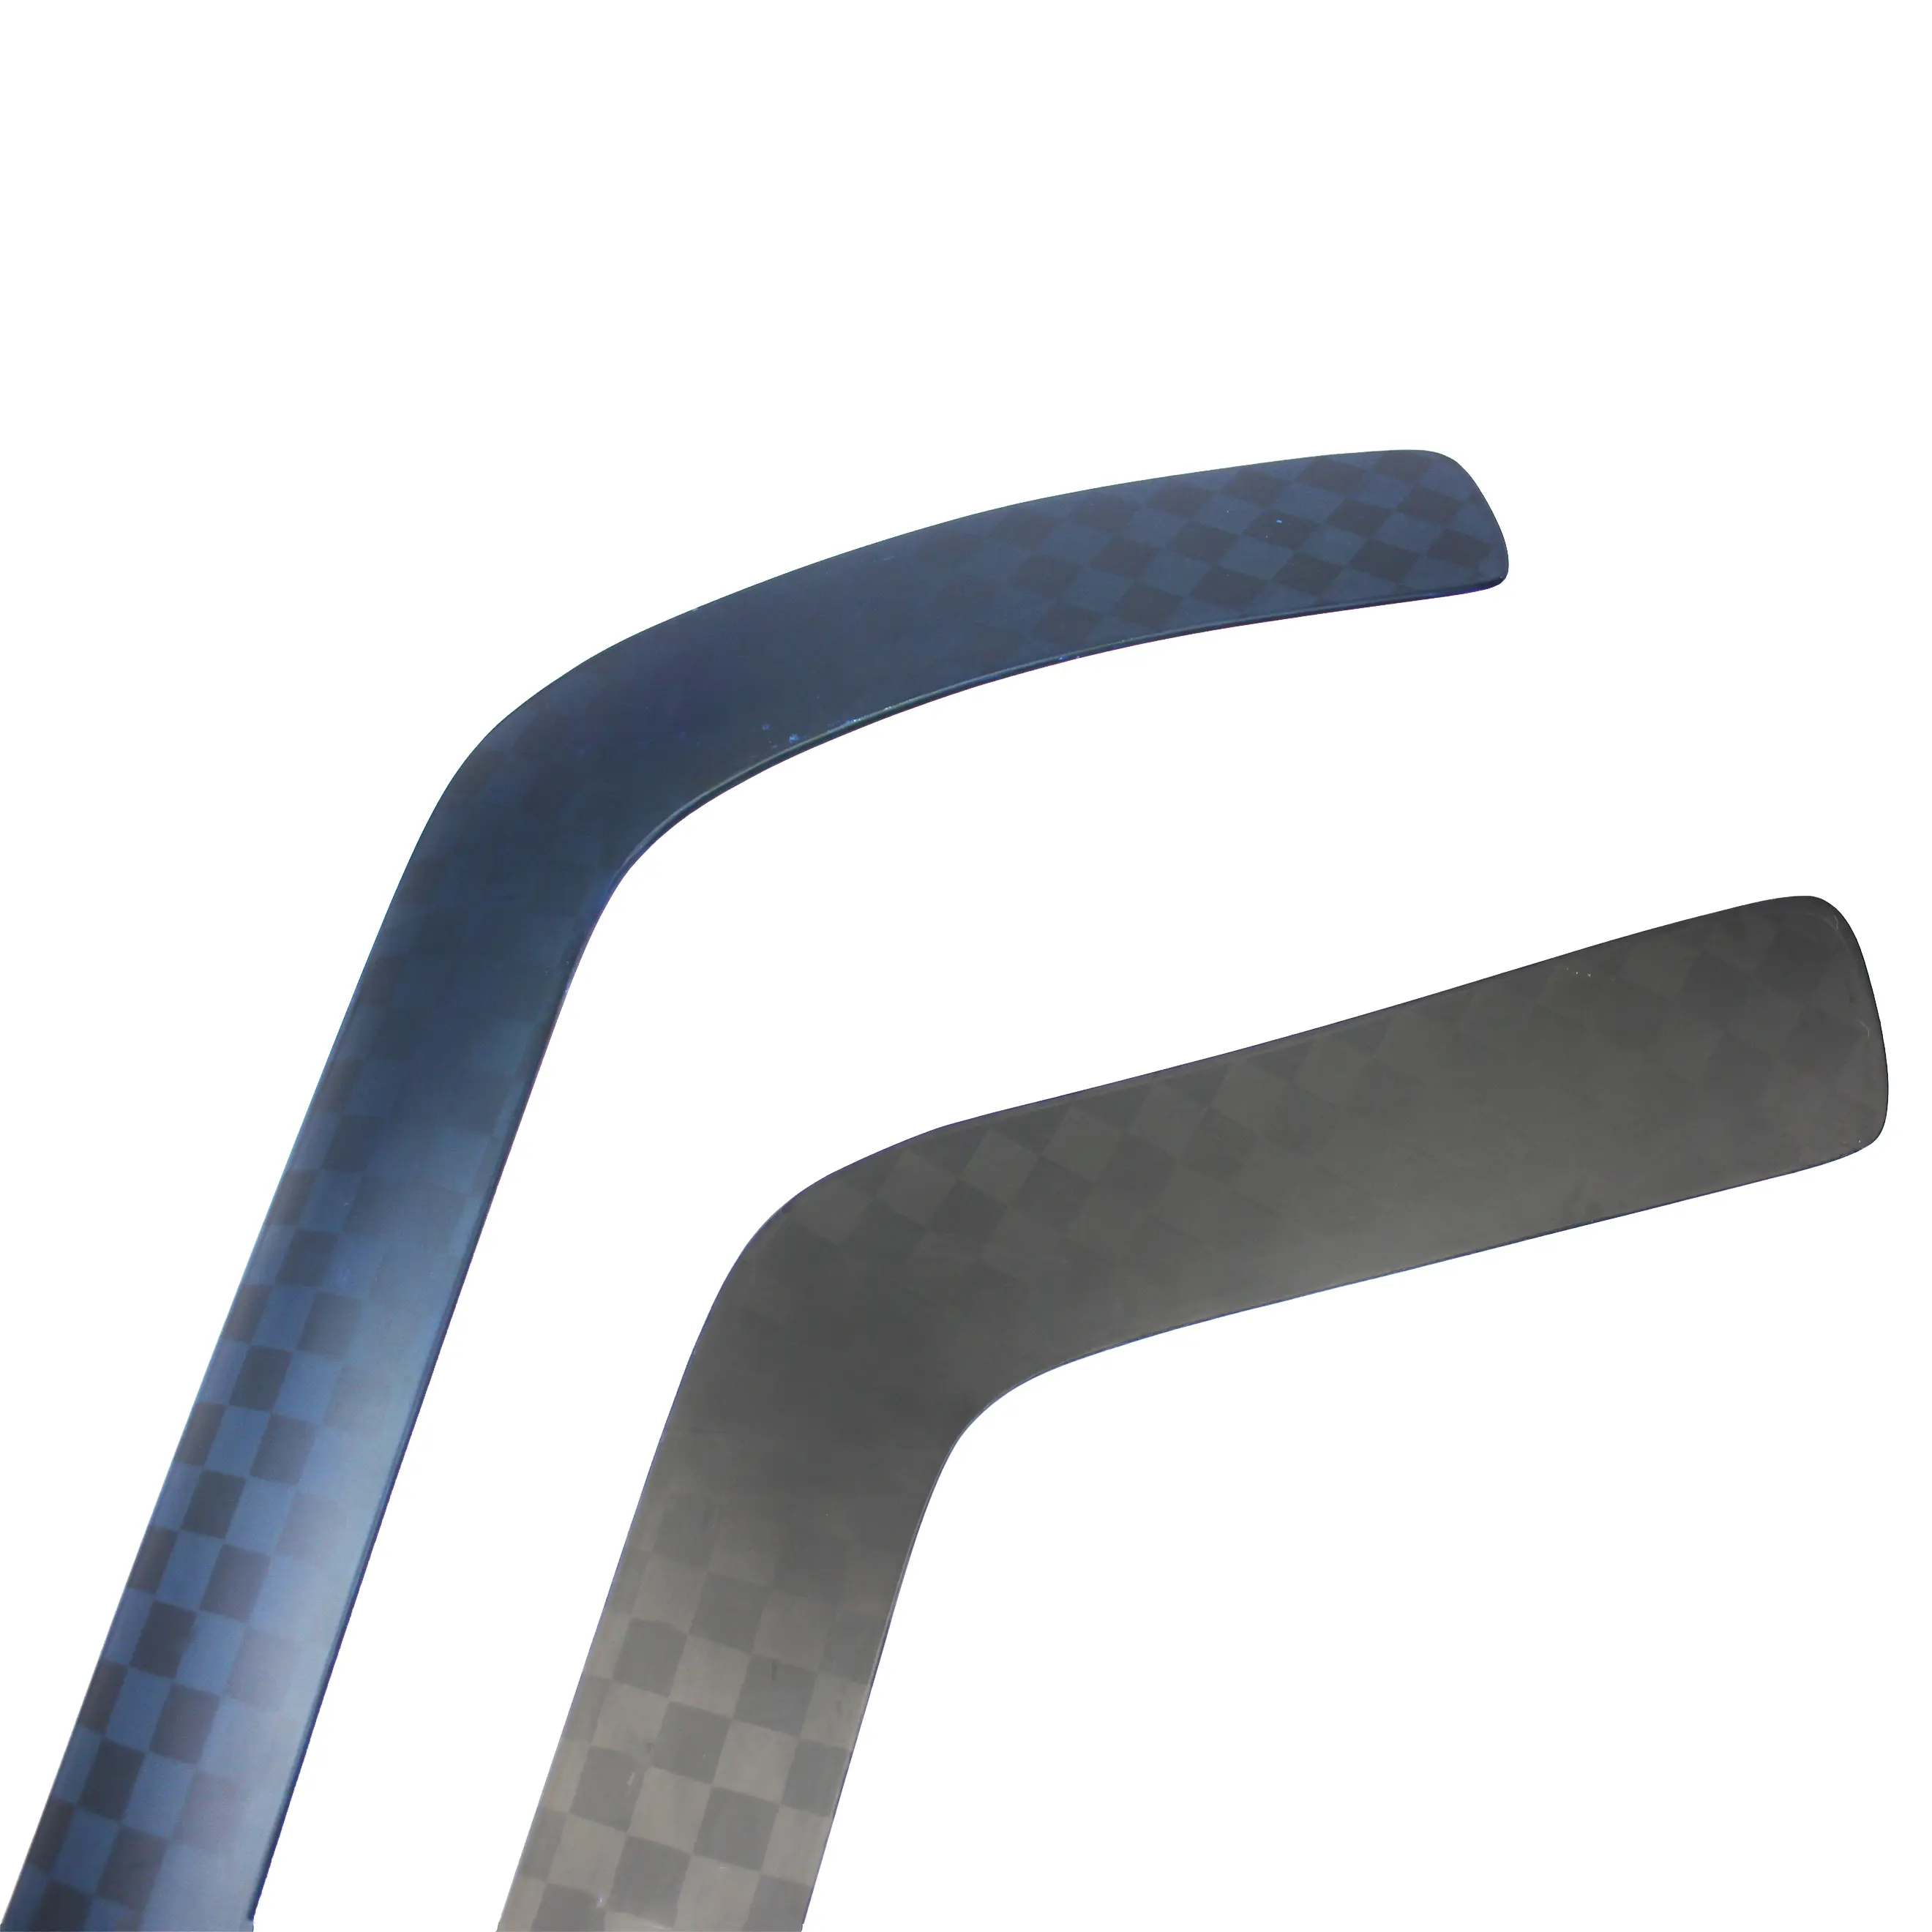 Hyperlite Super Lightweight Custom 375g 100% Carbon Material Carbon Ice Hockey Stick